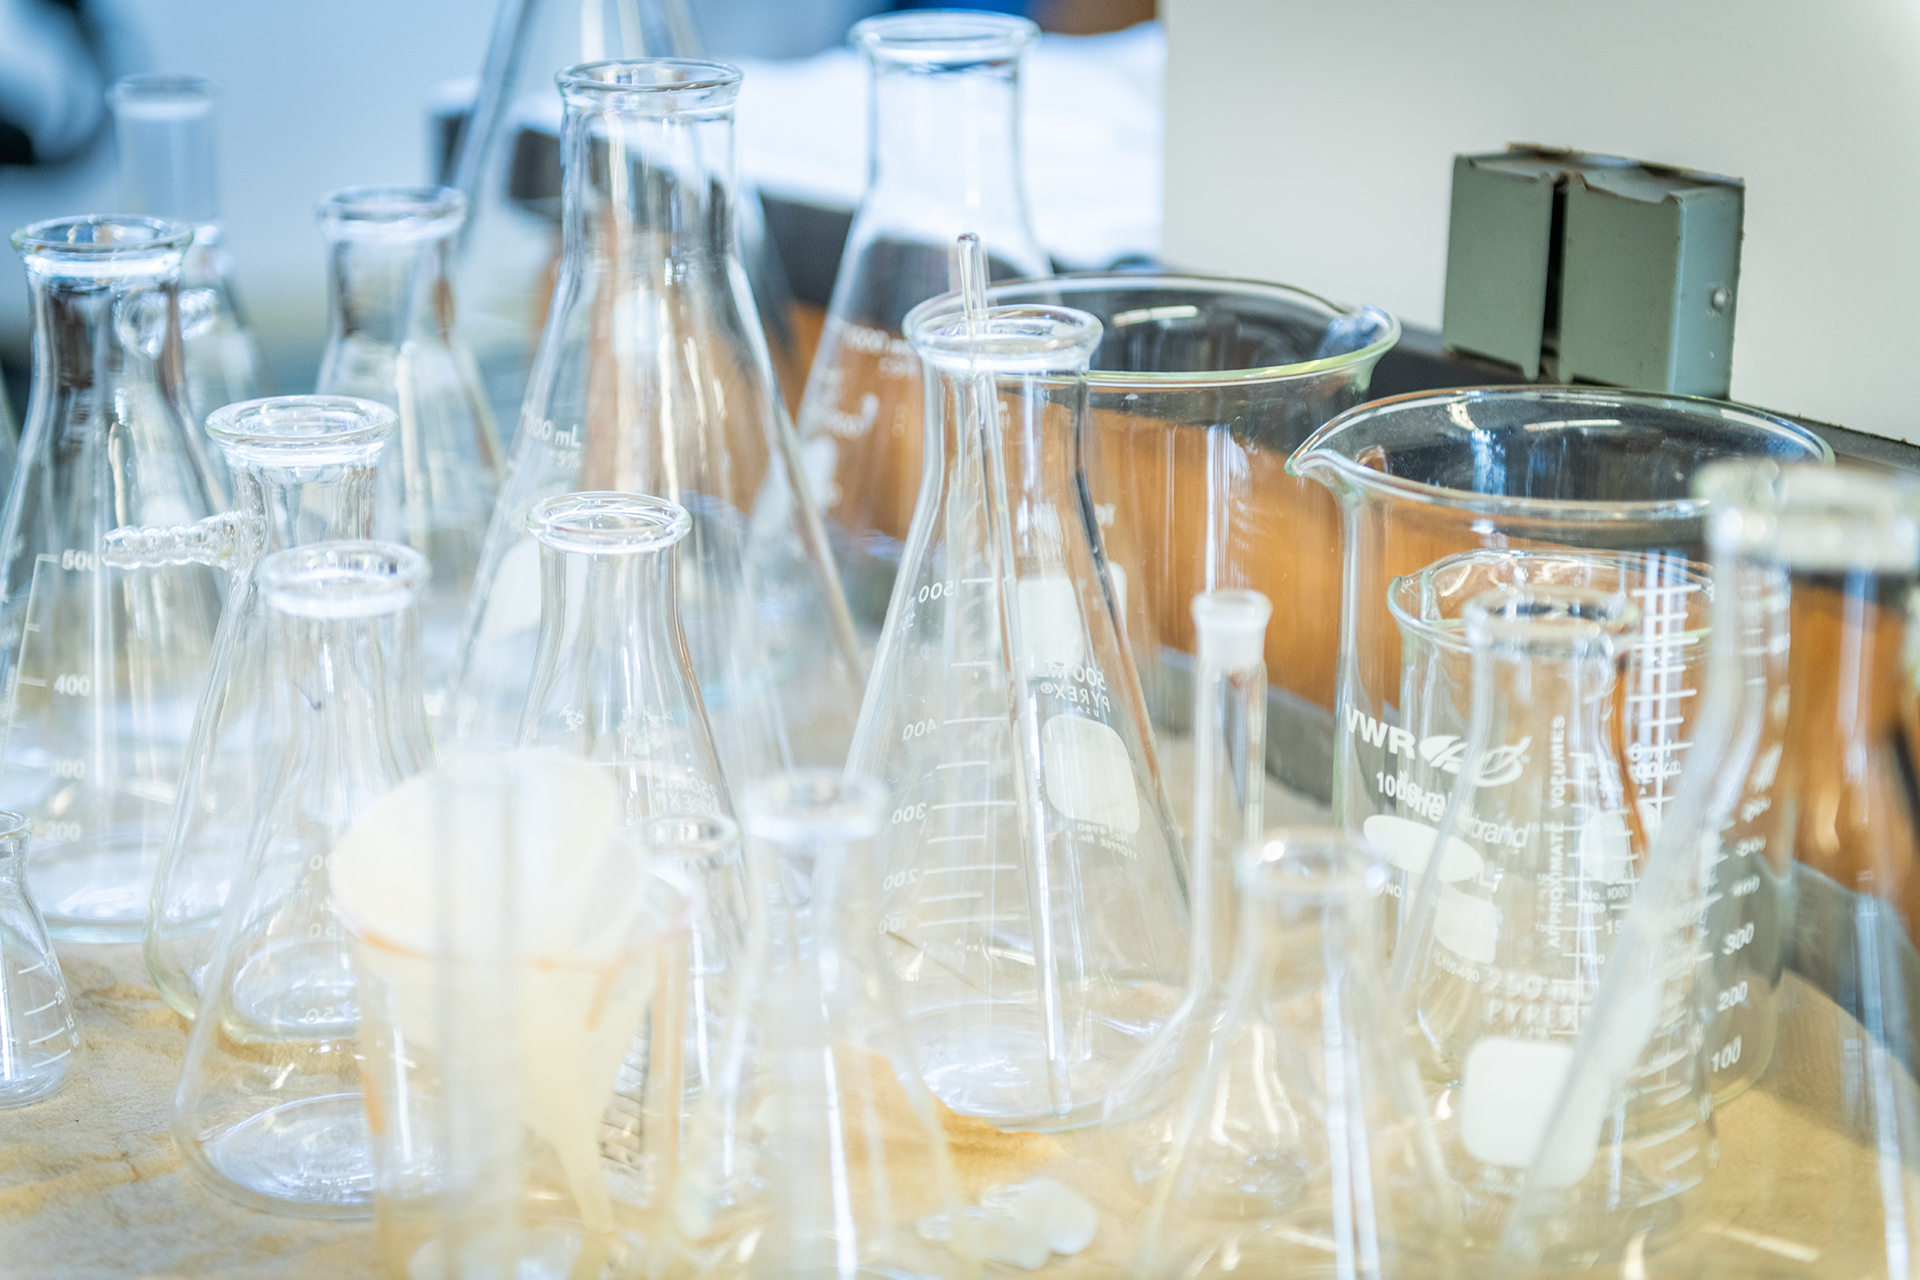 Equipment and beakers in Clark University science lab